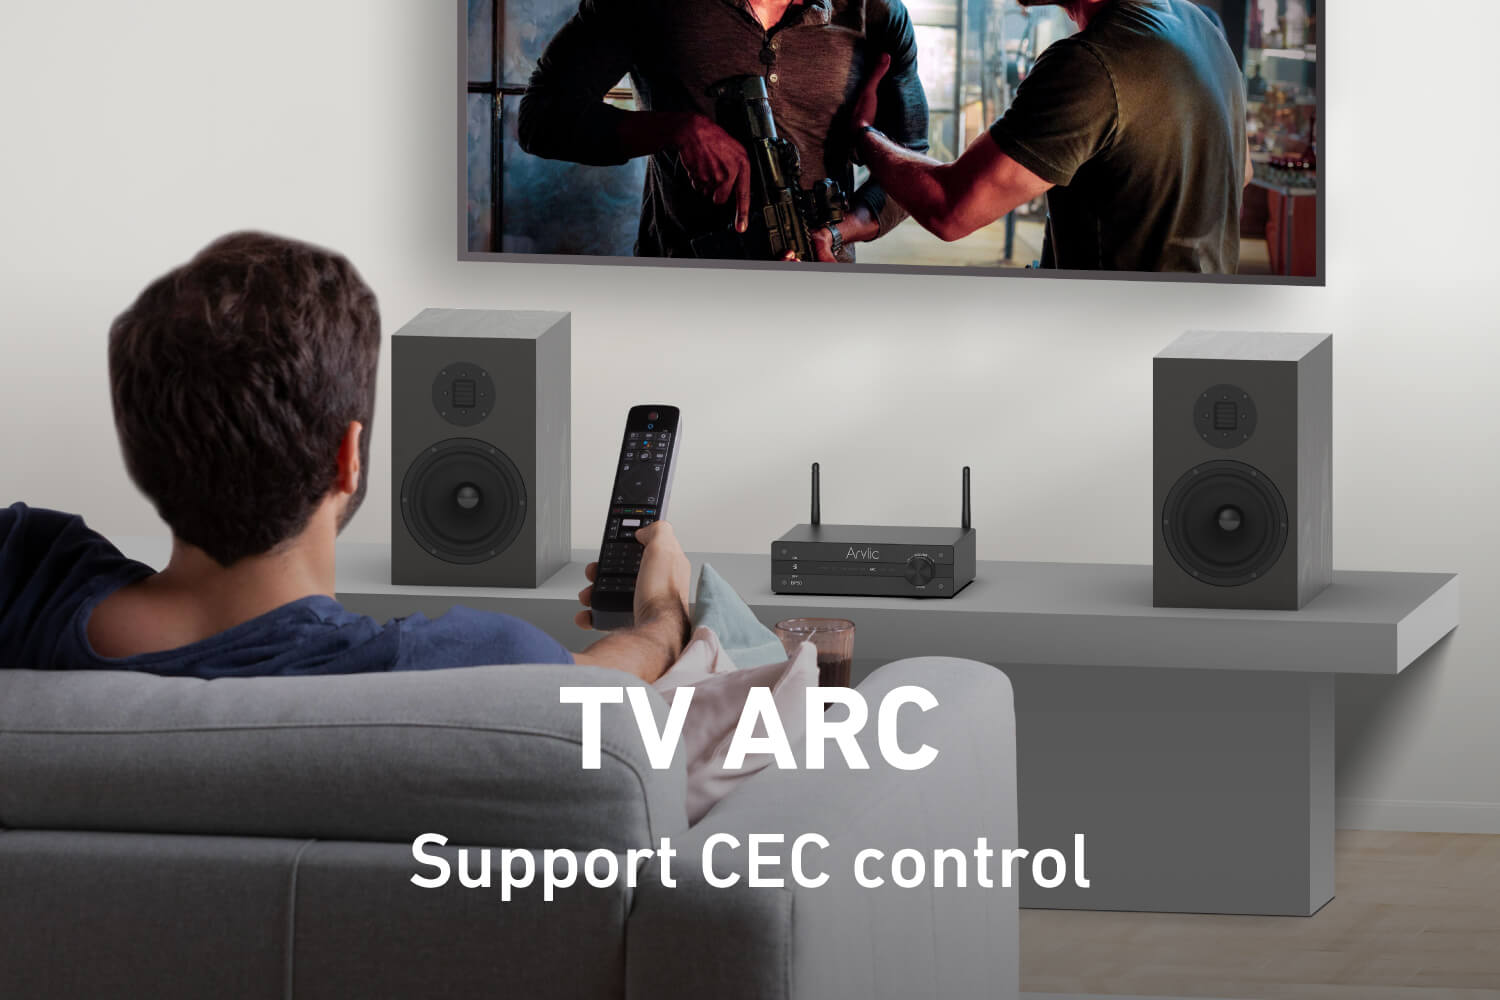 TV ARC, Support CEC control